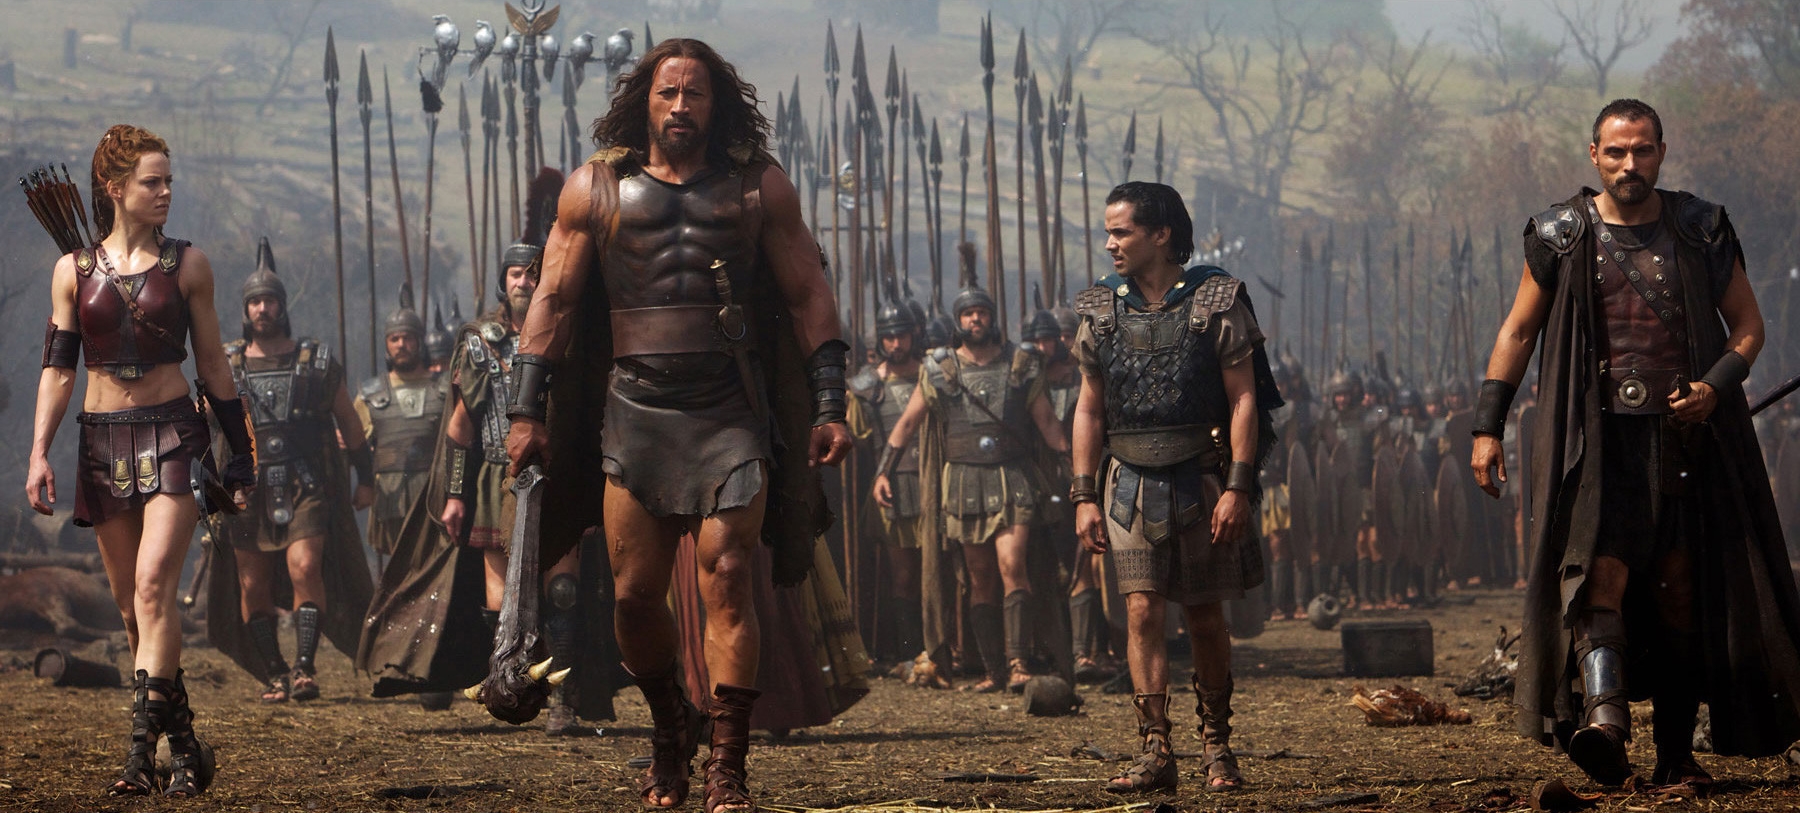 Kino premijere: ''Hercules''